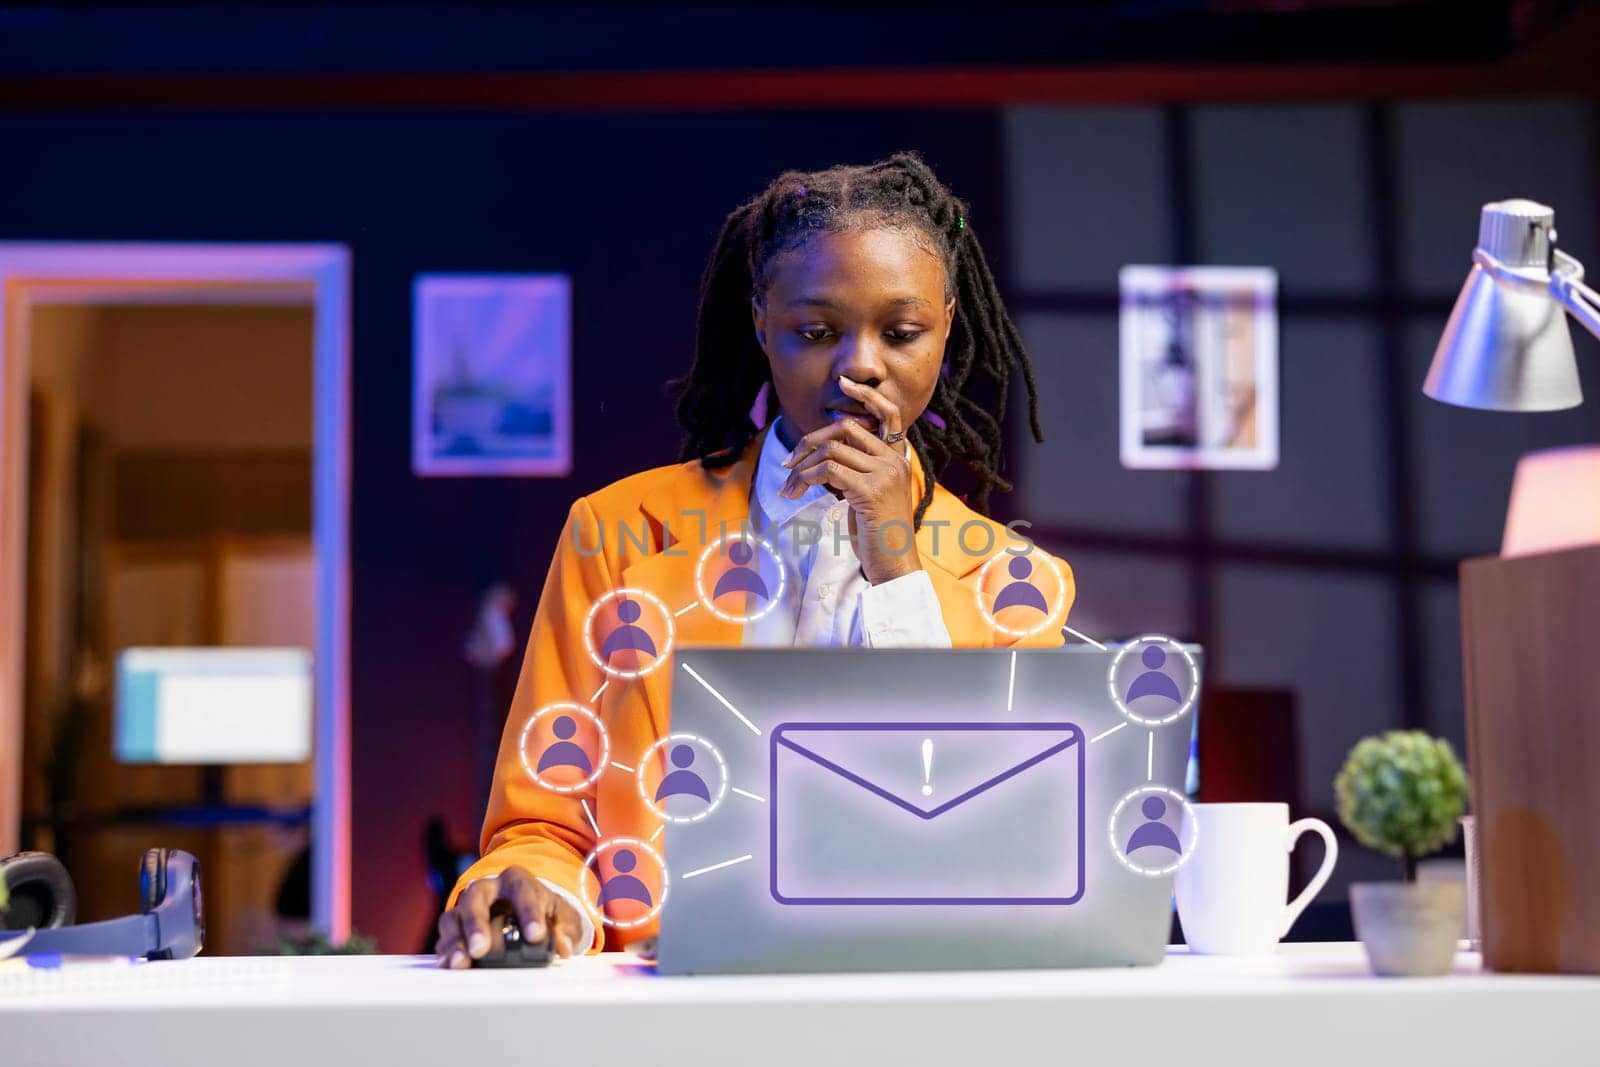 Woman working on laptop, sending emails, online connectivity concept by DCStudio